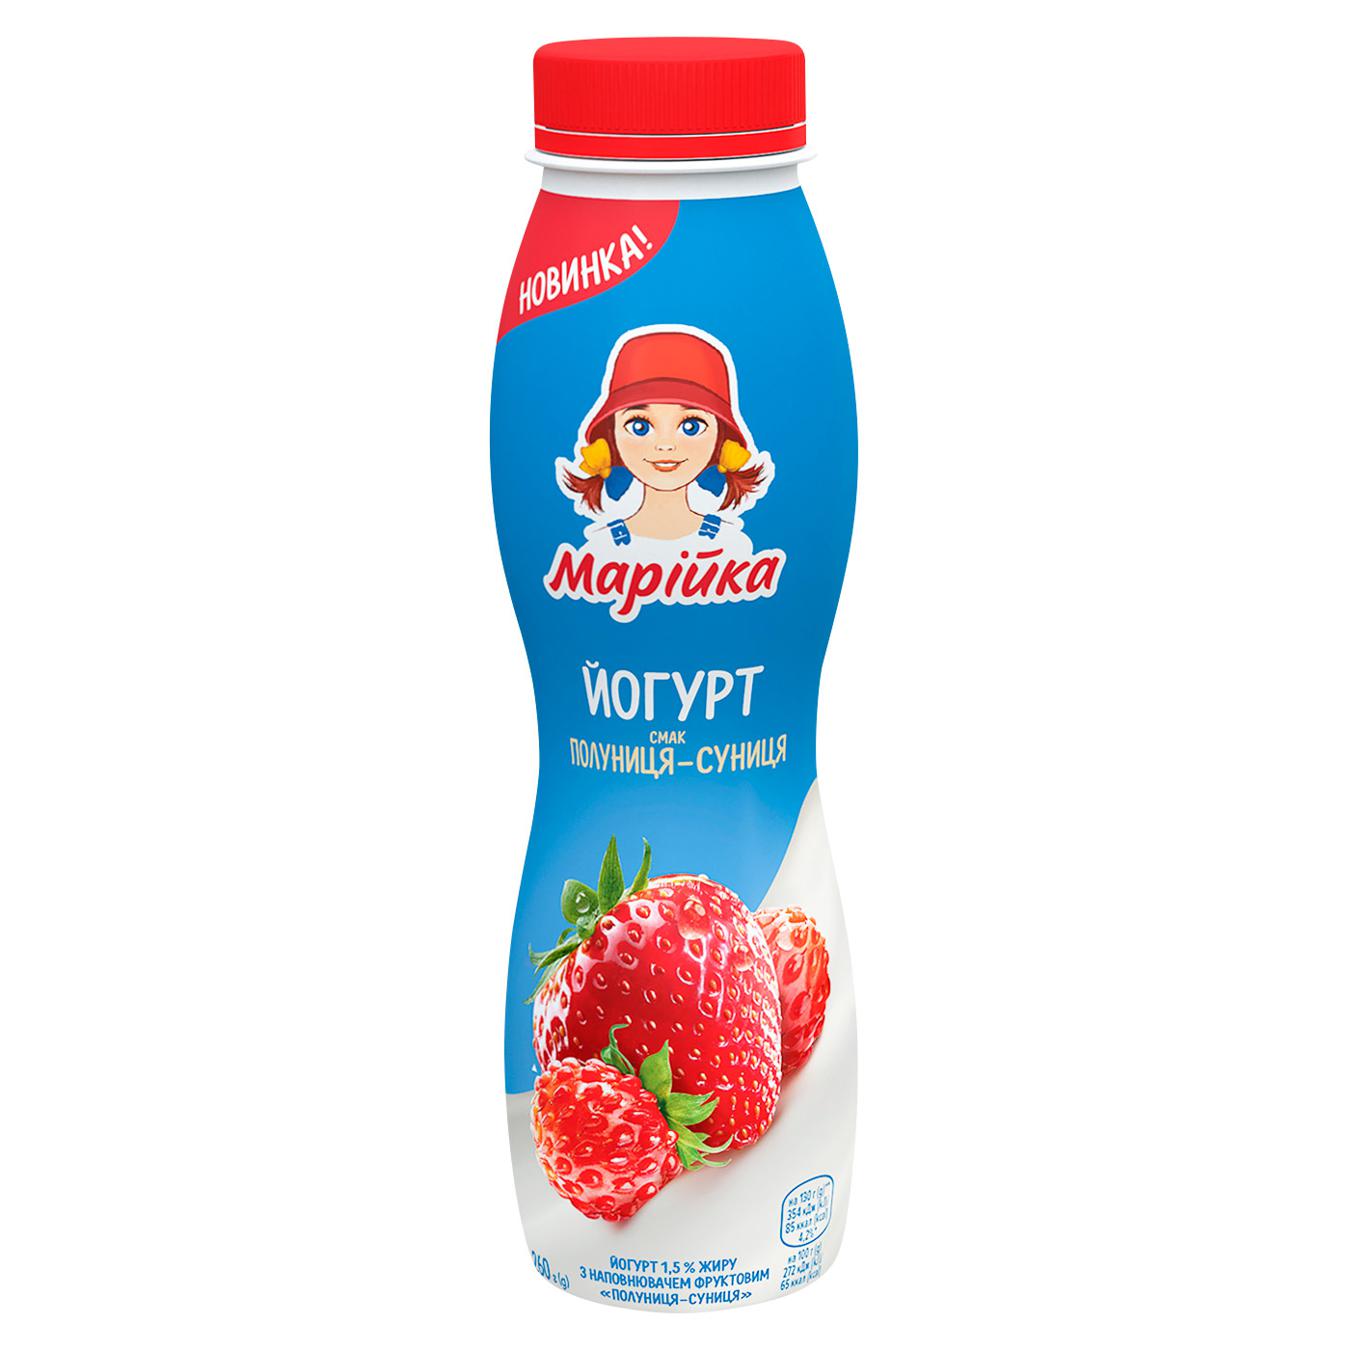 Mariyka drinking yogurt with strawberry-strawberry filler PET bottle 1.5% 260g